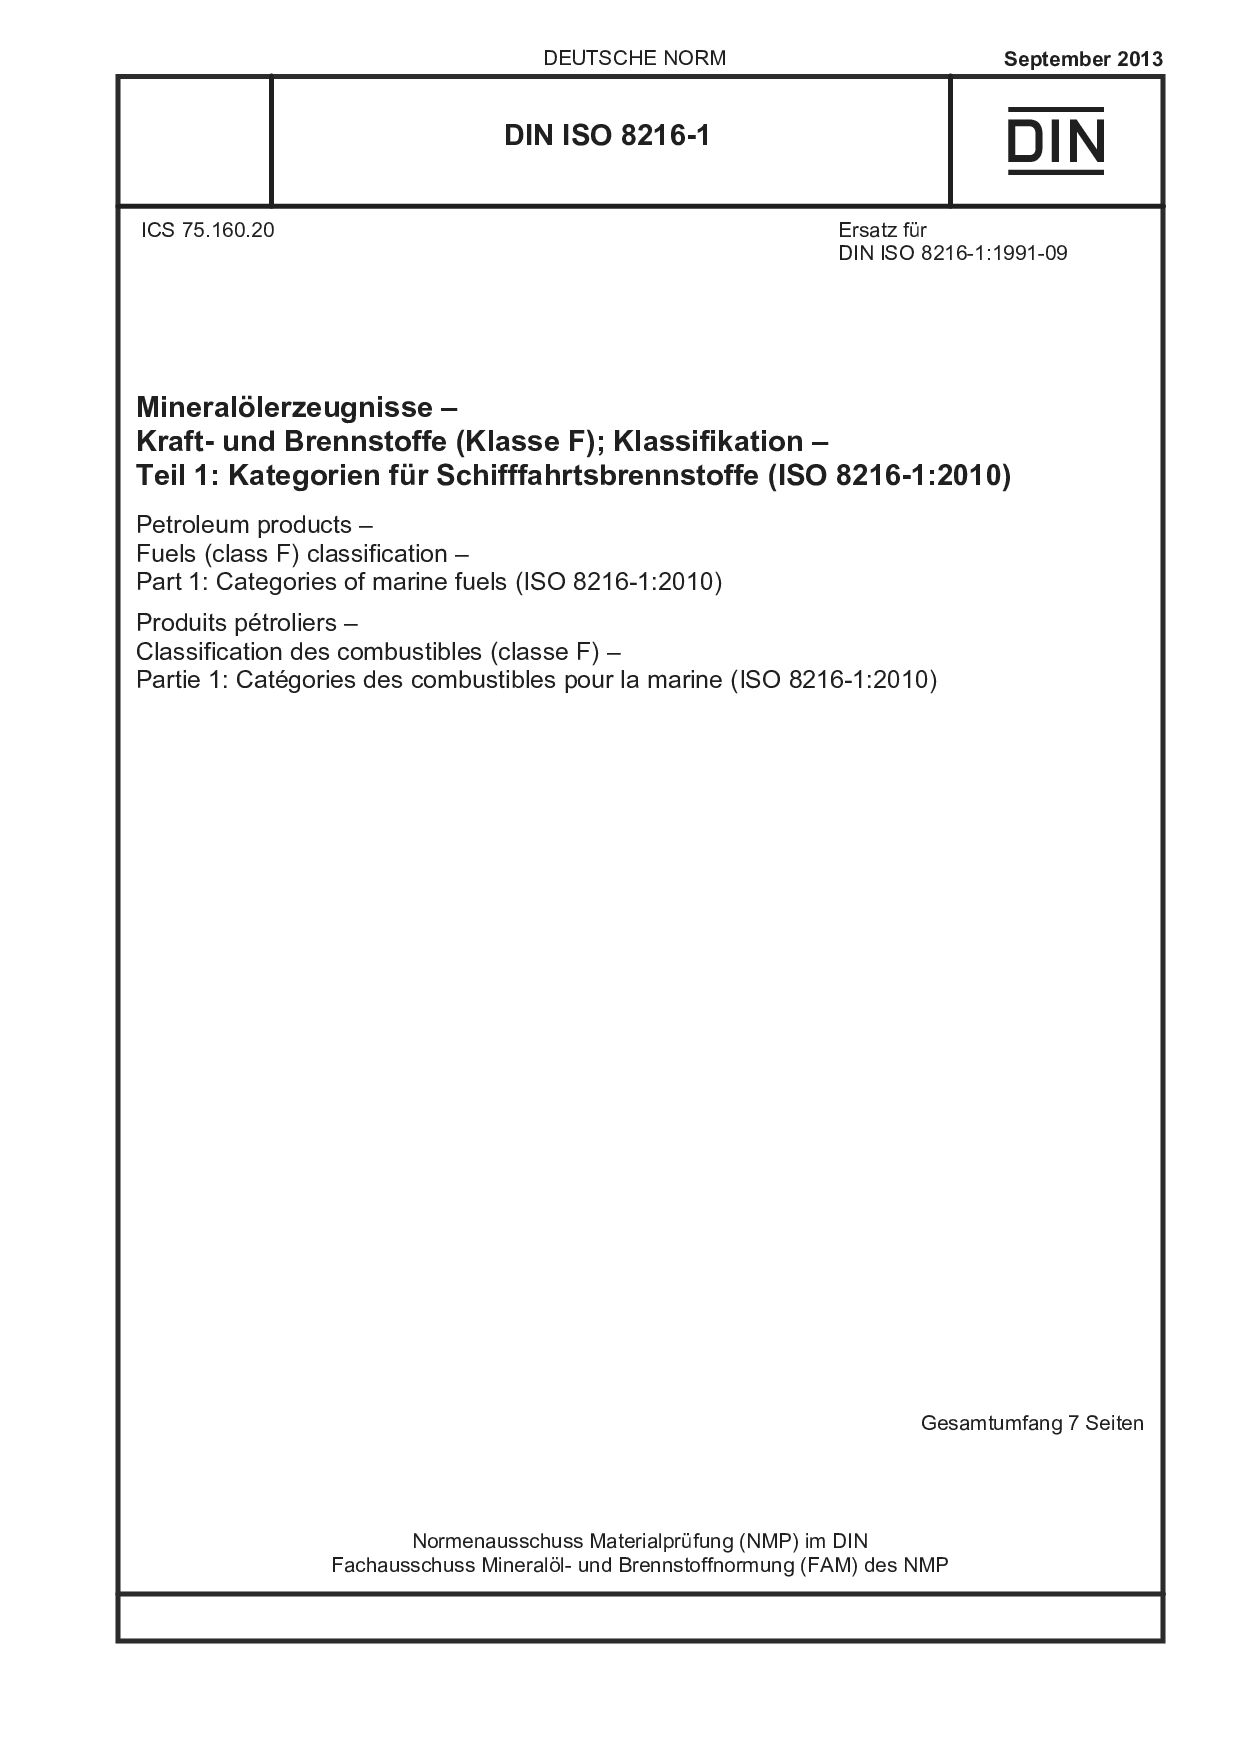 DIN ISO 8216-1:2013